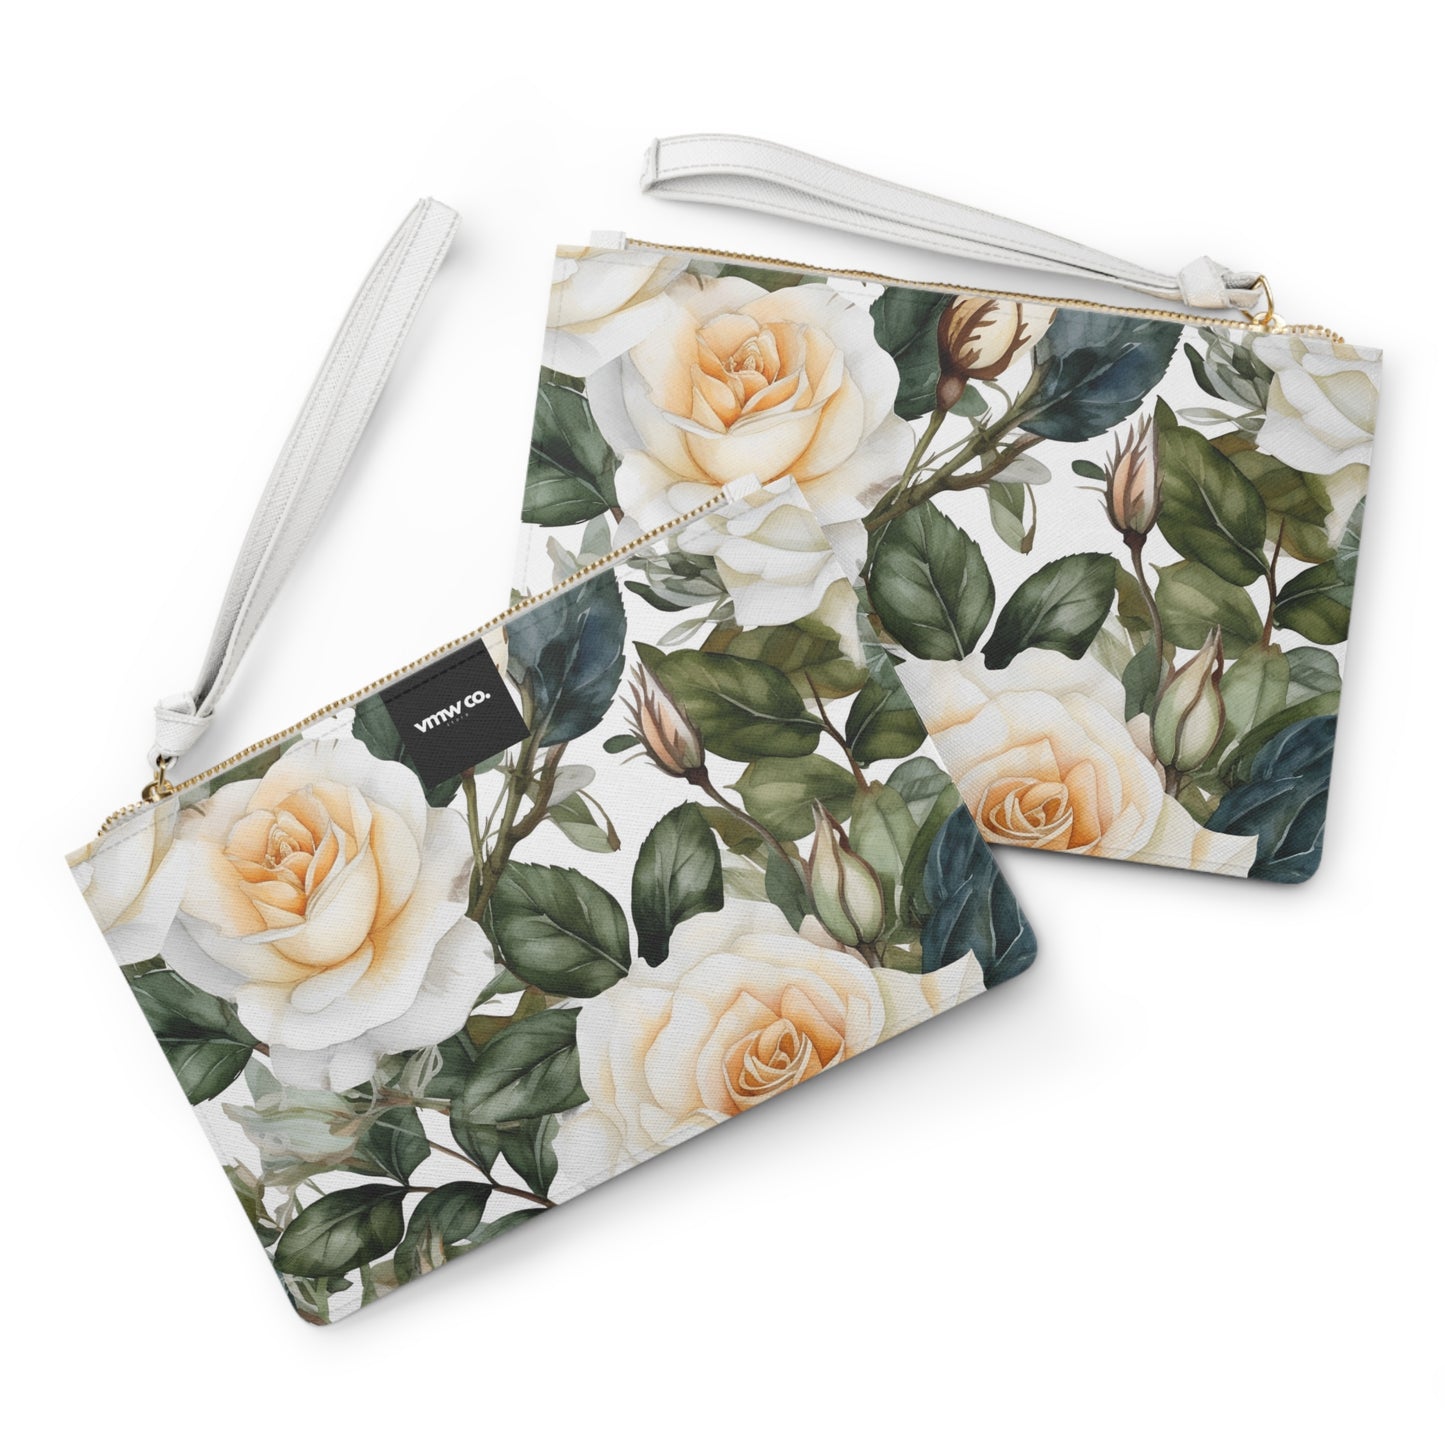 White Rose Floral Clutch Bag